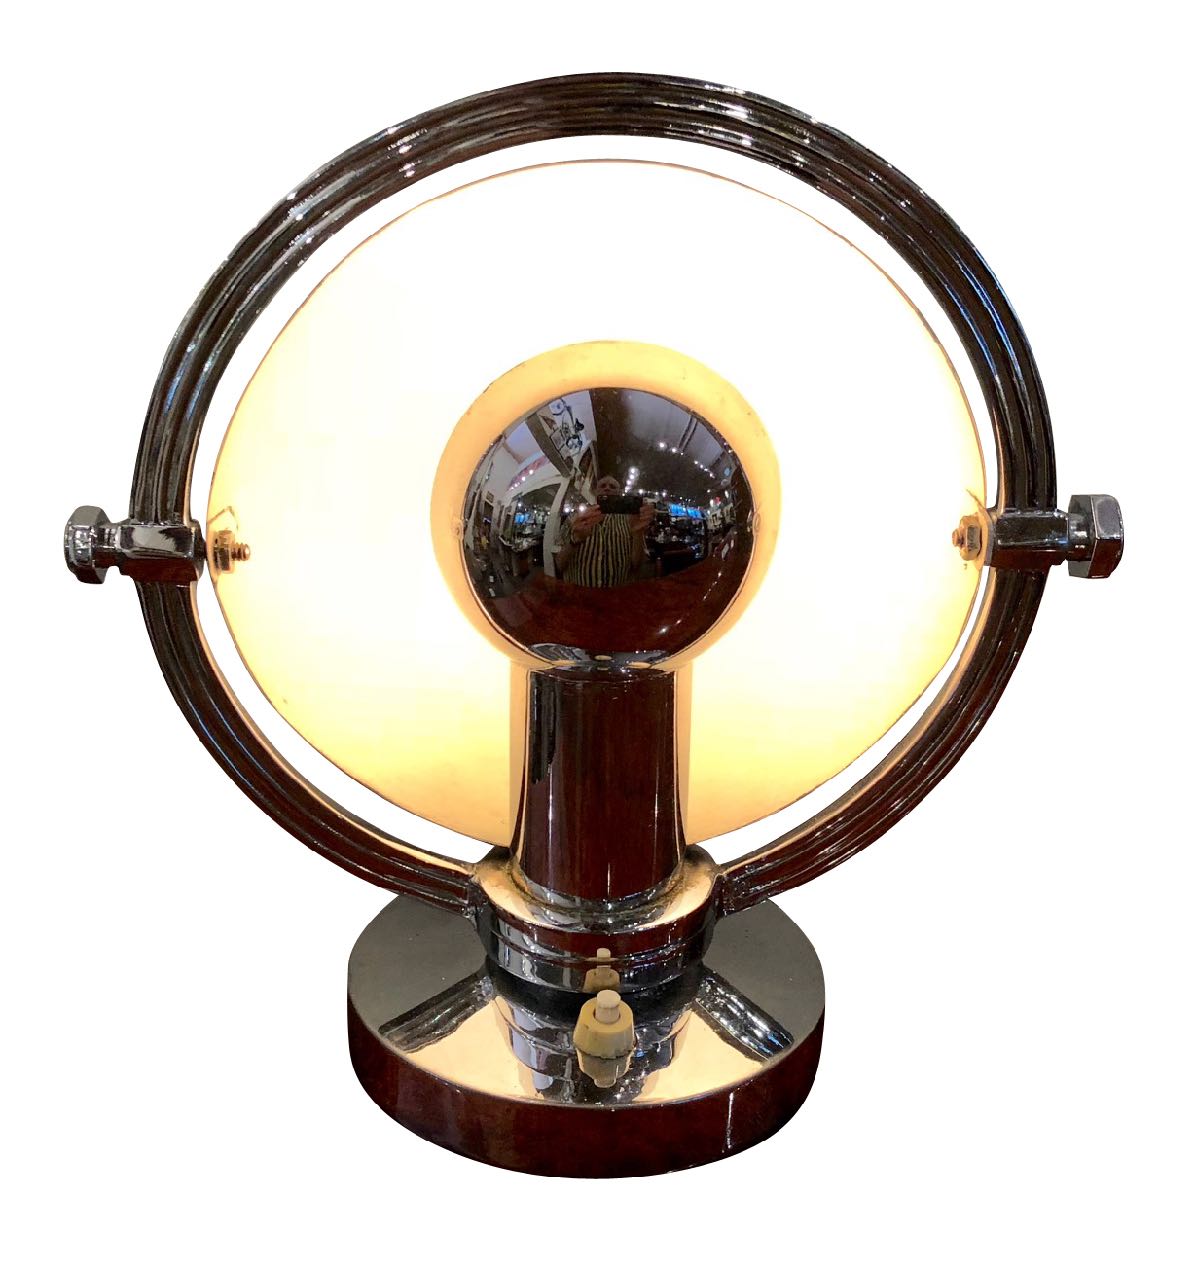 Modernist Streamline Desk Lamp Industrial Art Deco Design